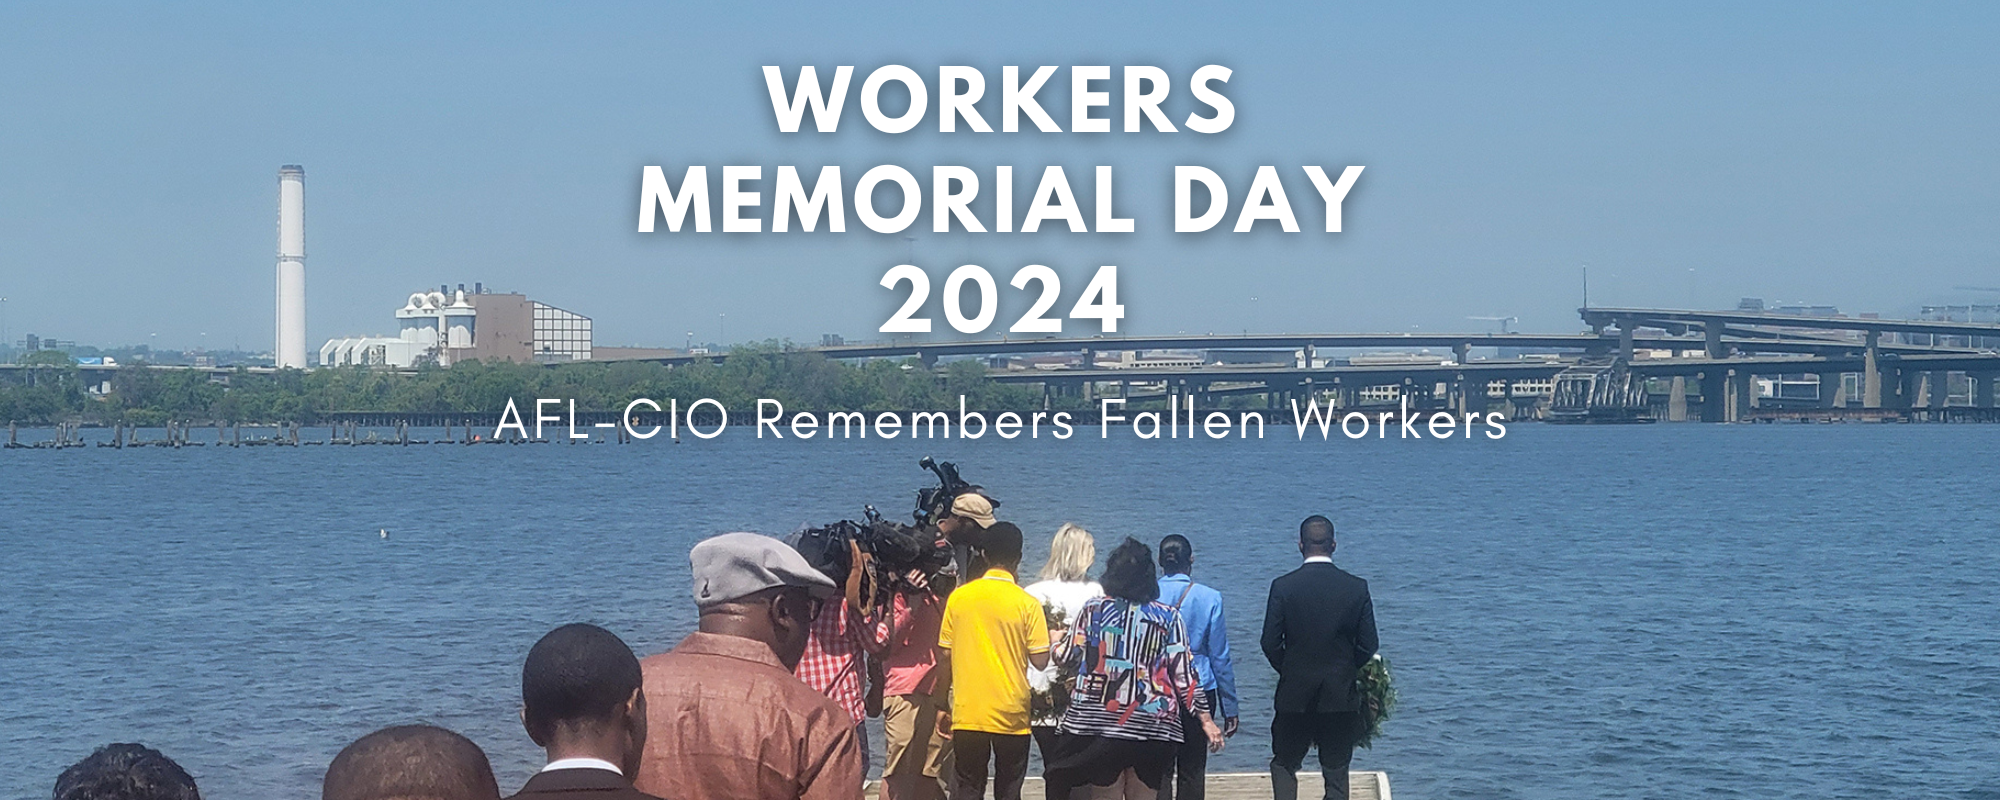 Workers Memorial Day 2024